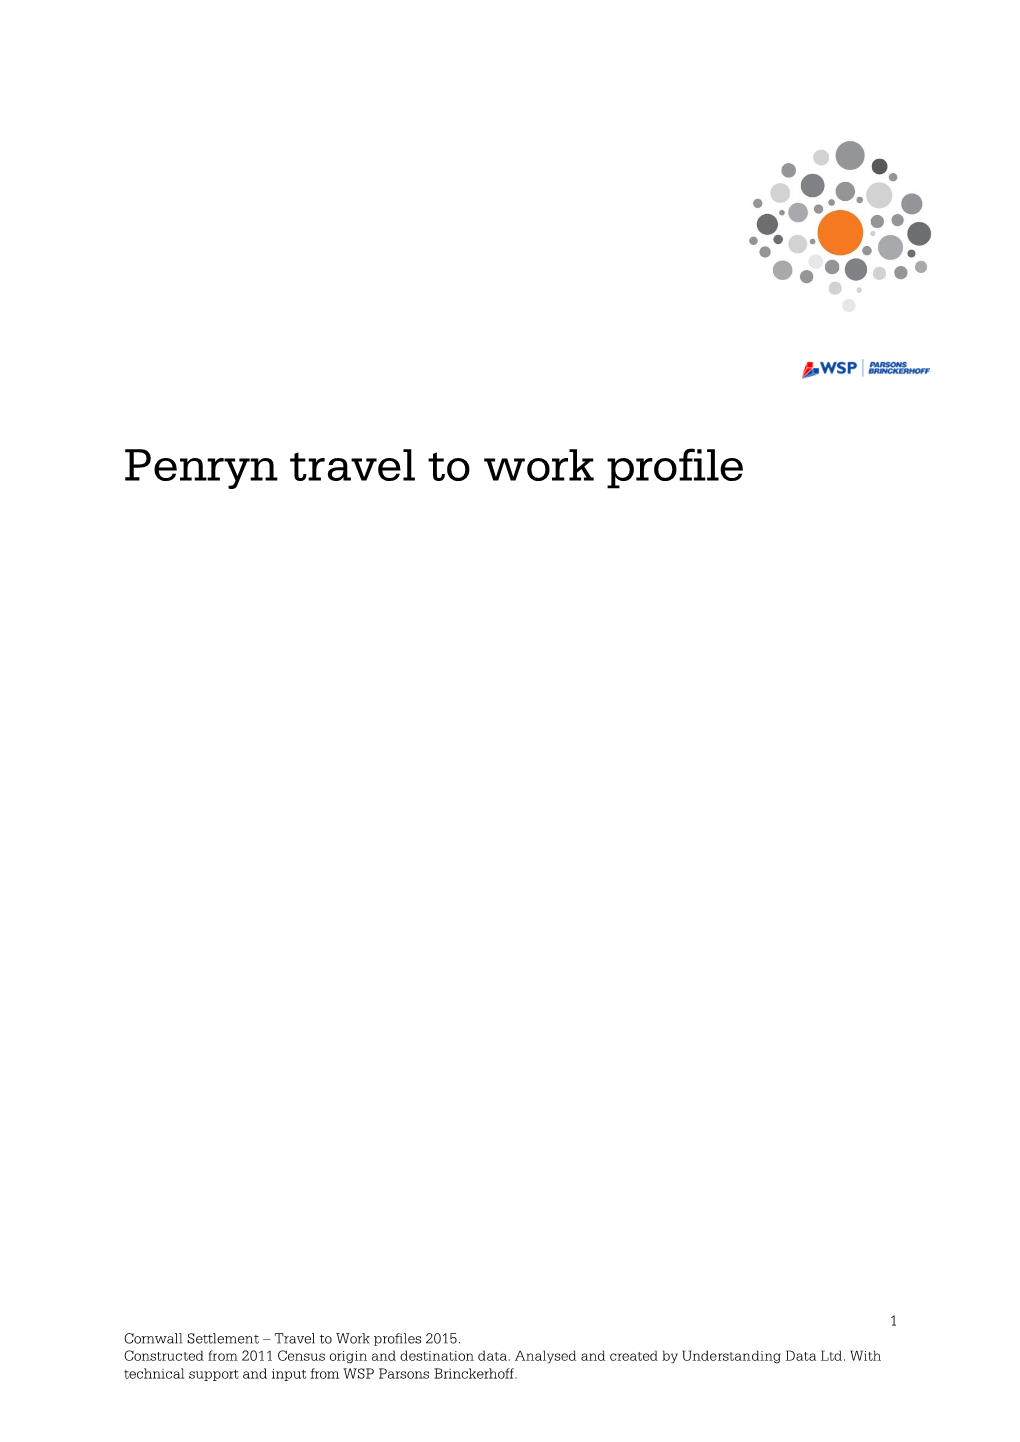 Penryn Travel to Work Profile